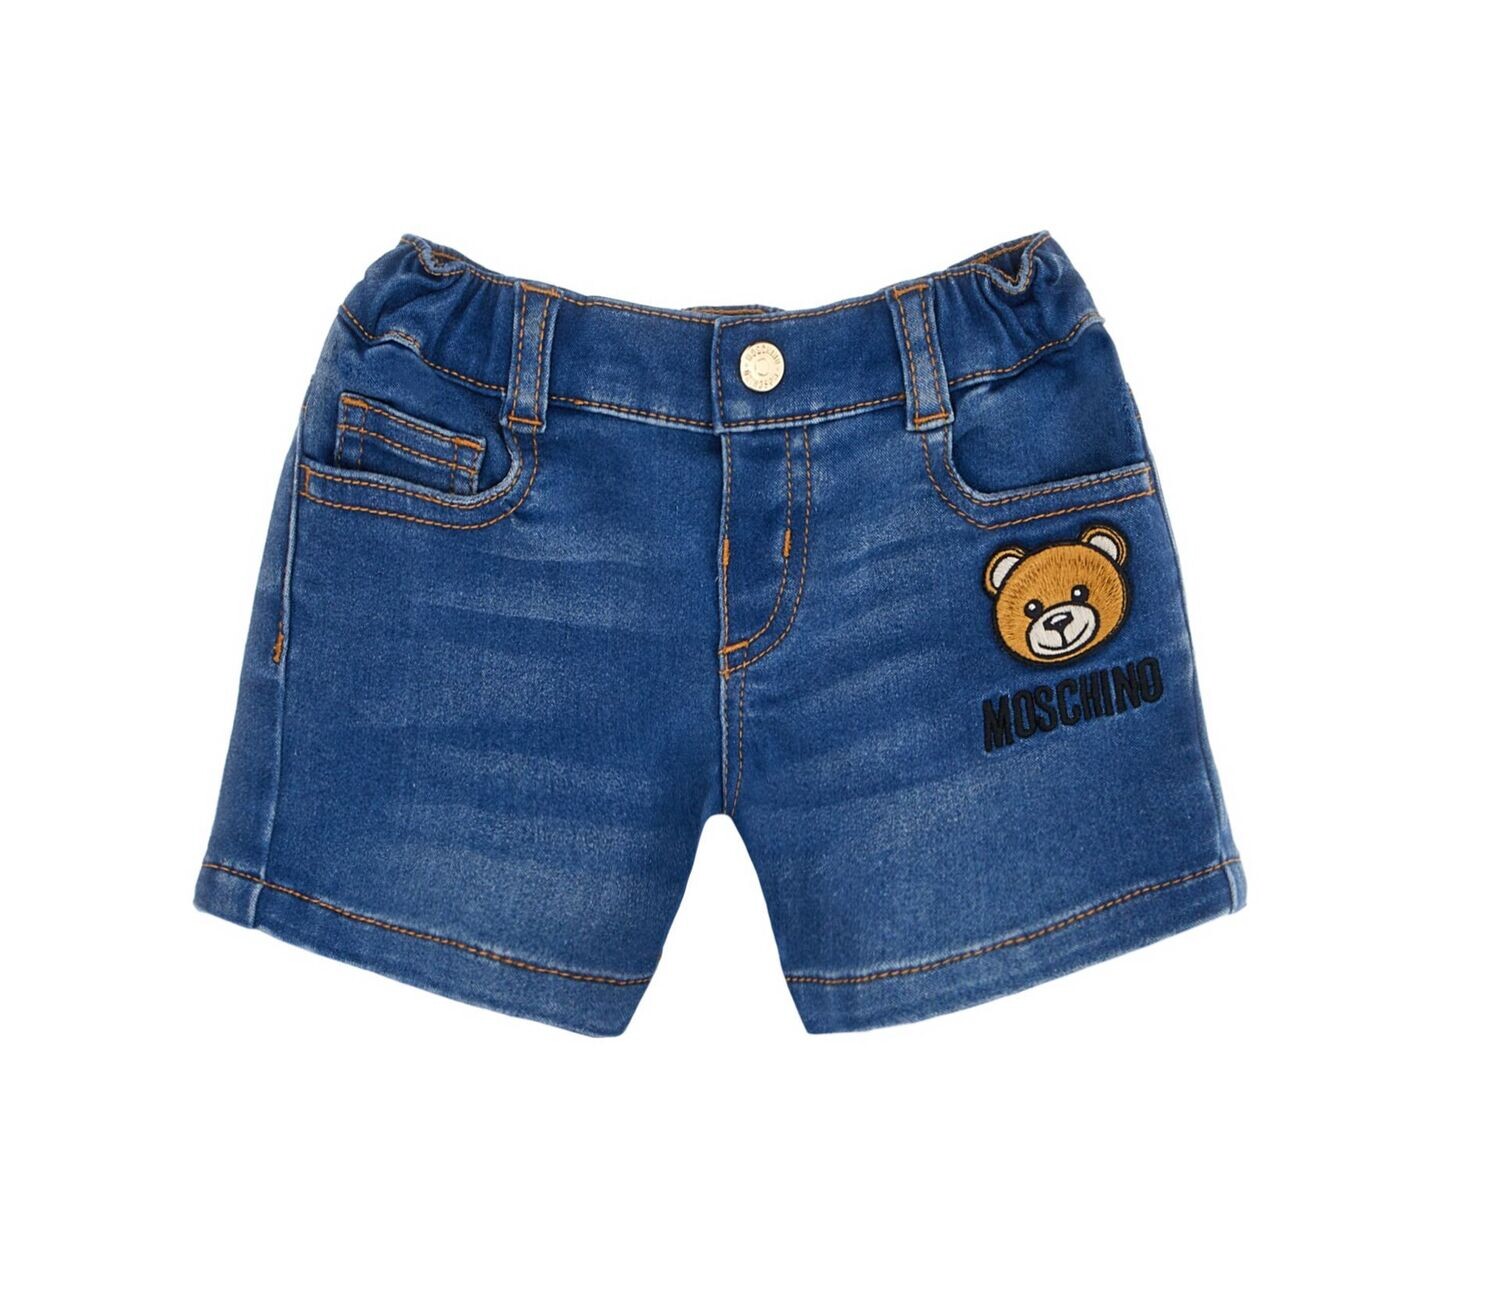 Moschino - Short jeans Teddy logo, Size: 6 mesi